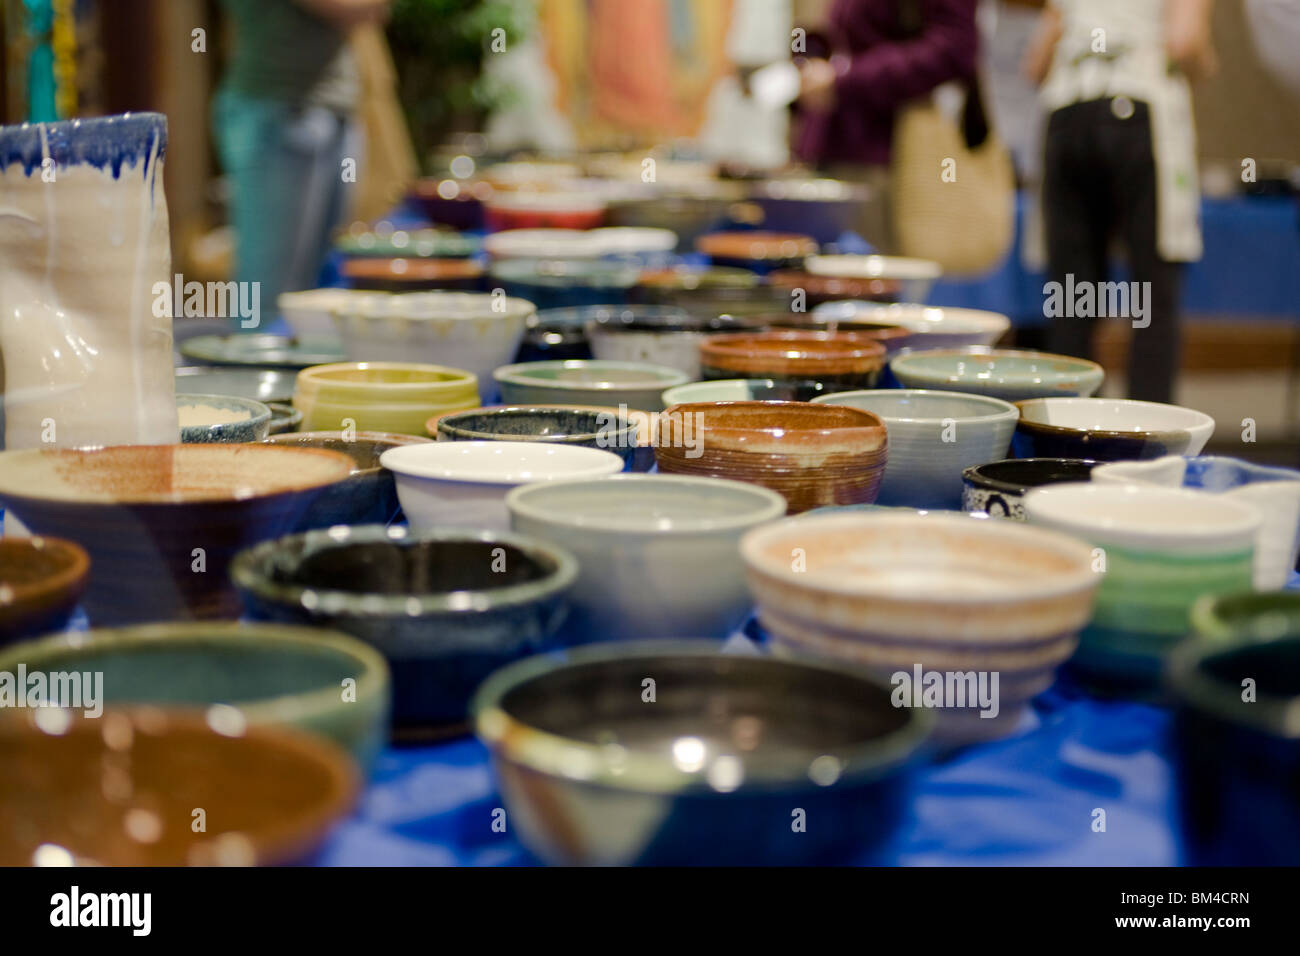 Table full of handmade ceramic bowls Stock Photo